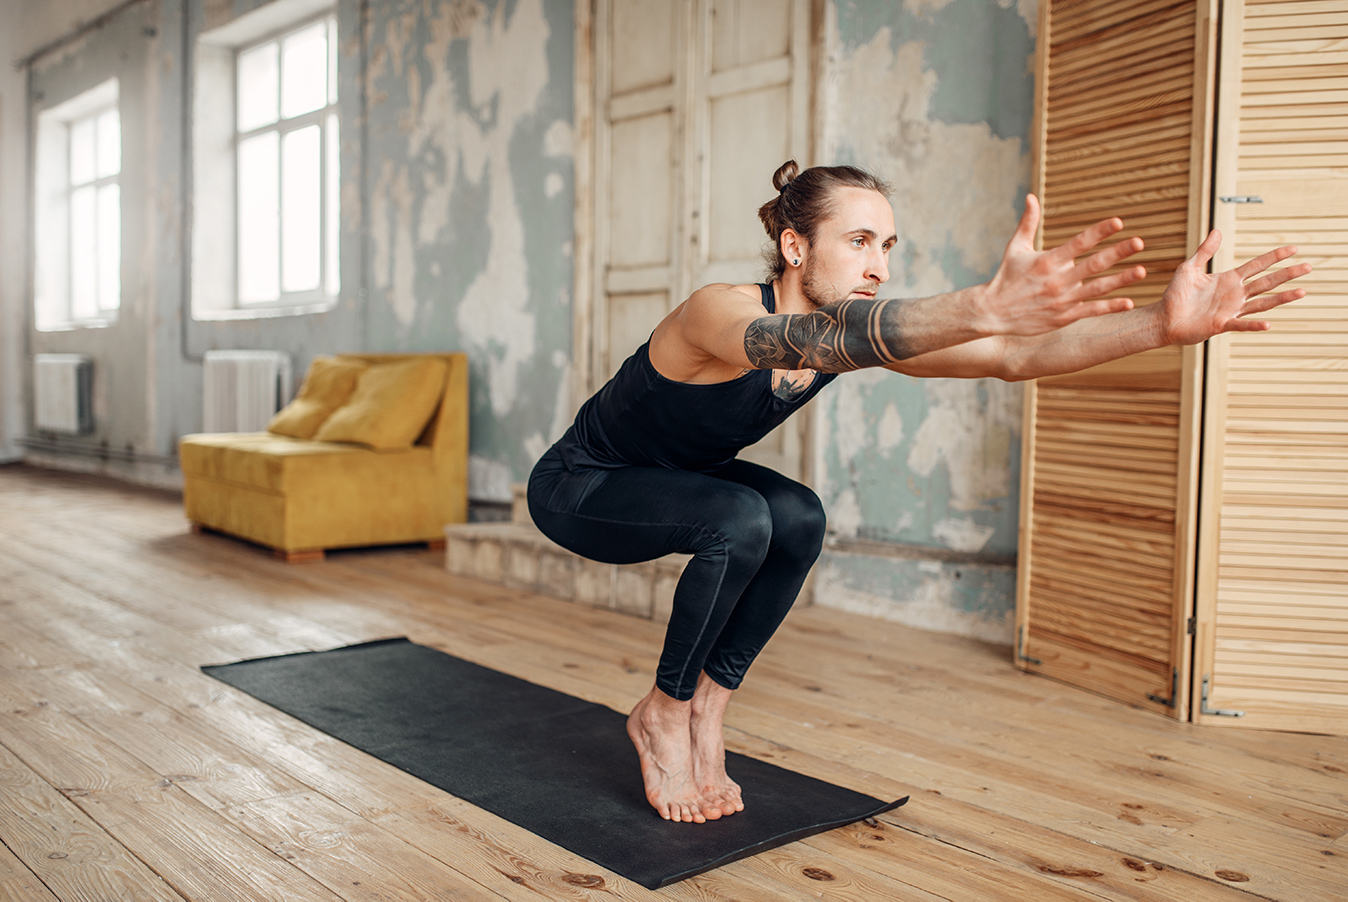 Get Detailed Guide of 26 Bikram yoga Poses & Benefits by Patrick